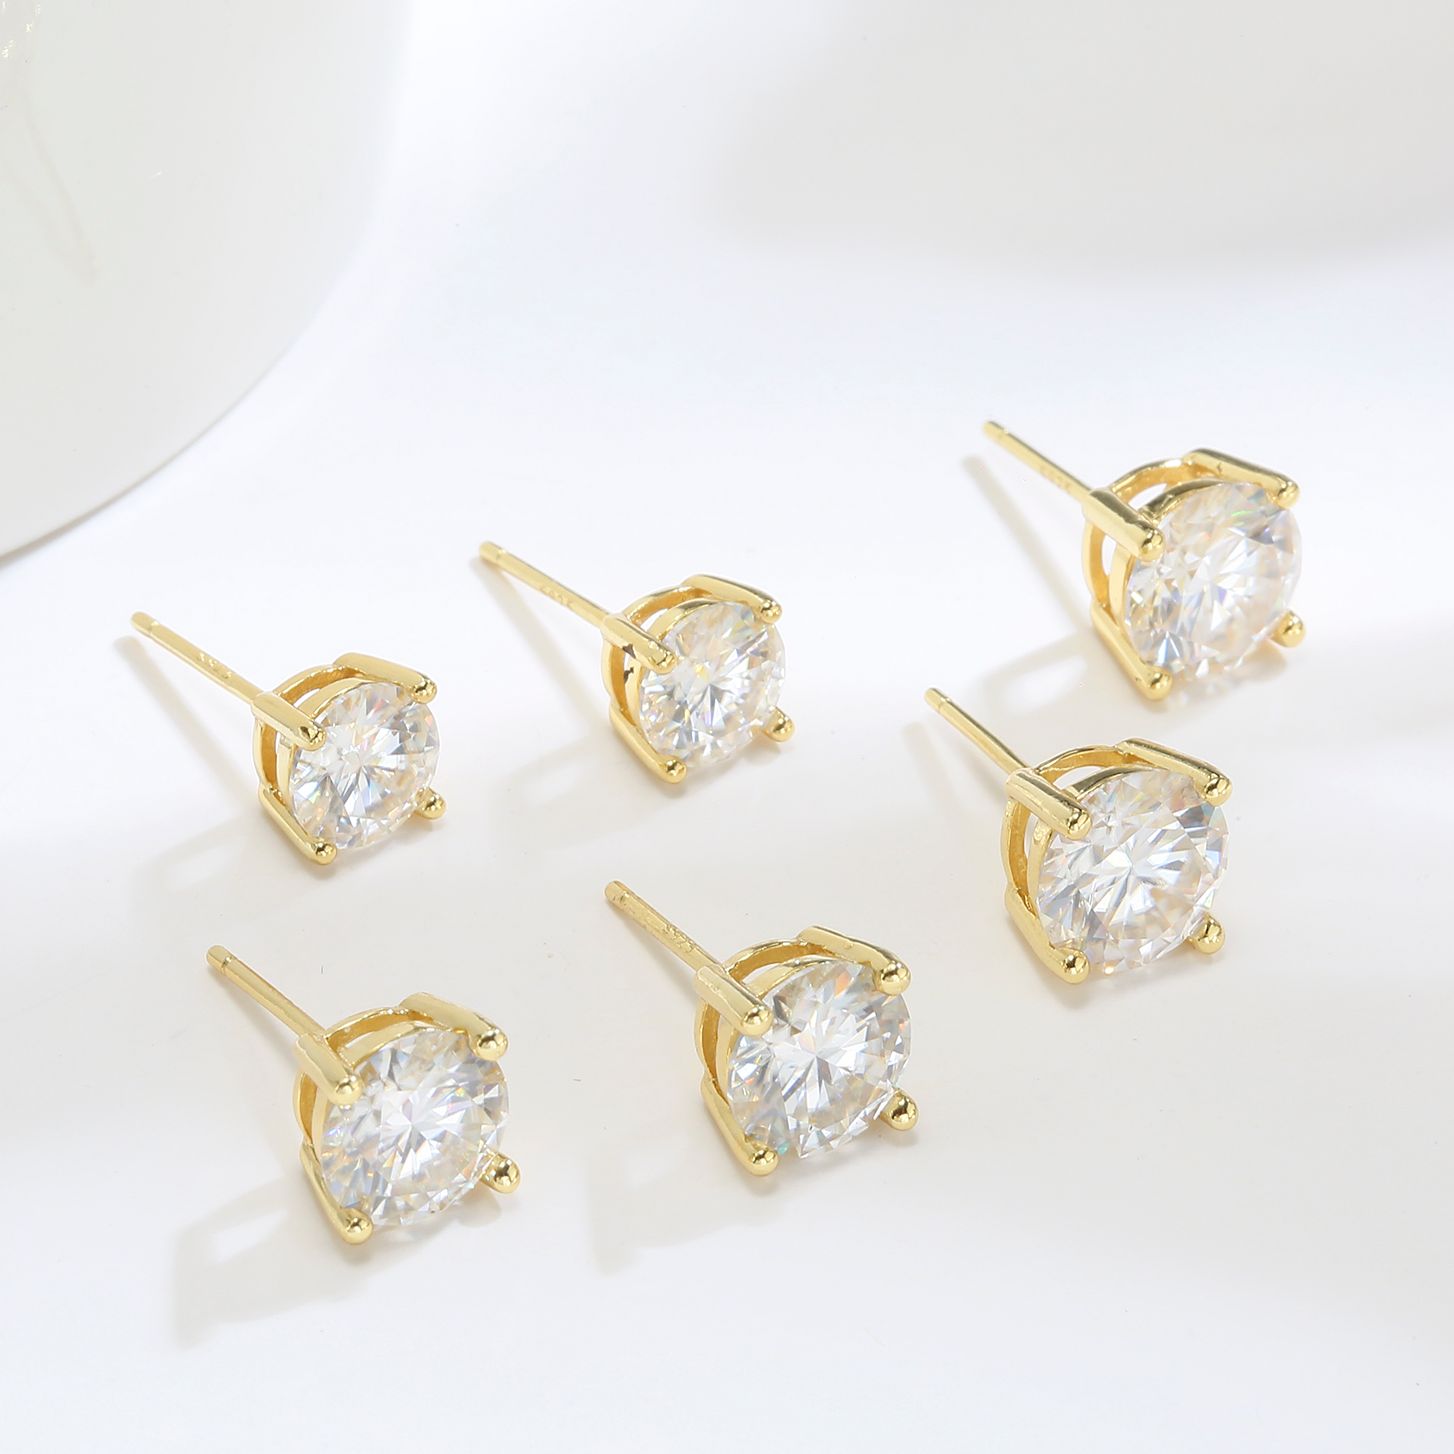 Moissanite-Earrings-18K-Gold-925-Sterling-Silver-Stud-Earring-for-Women-3MM-Fashion-Wedding-Lab-Created-5